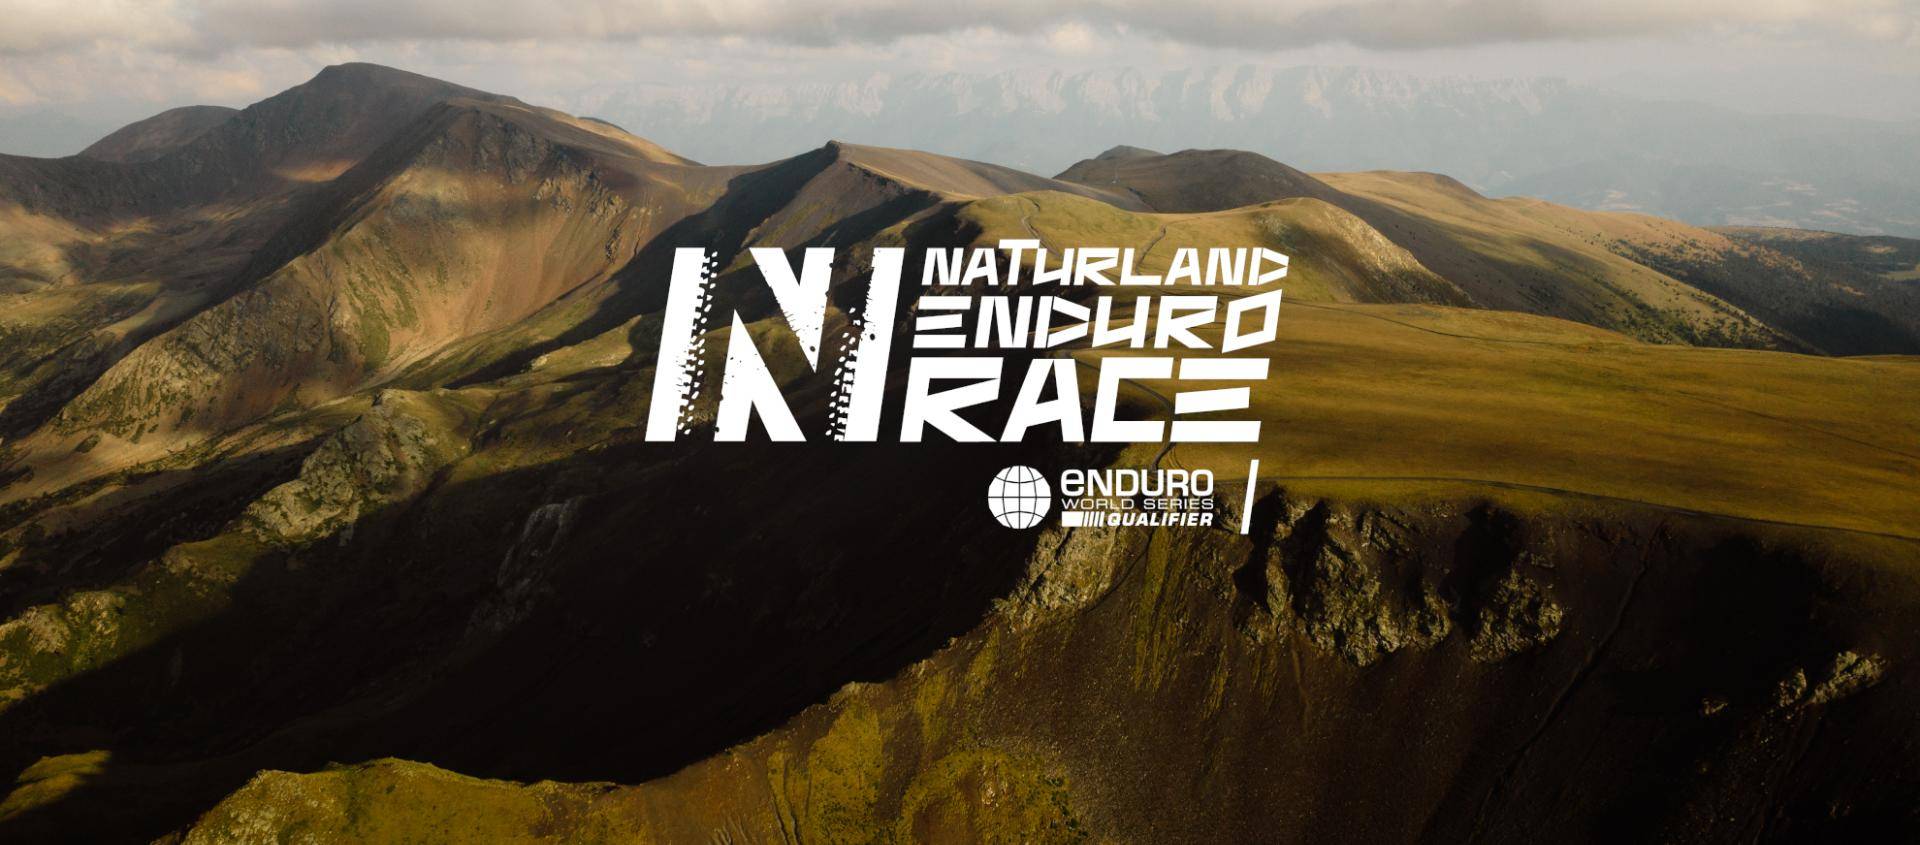 Naturland Enduro Race